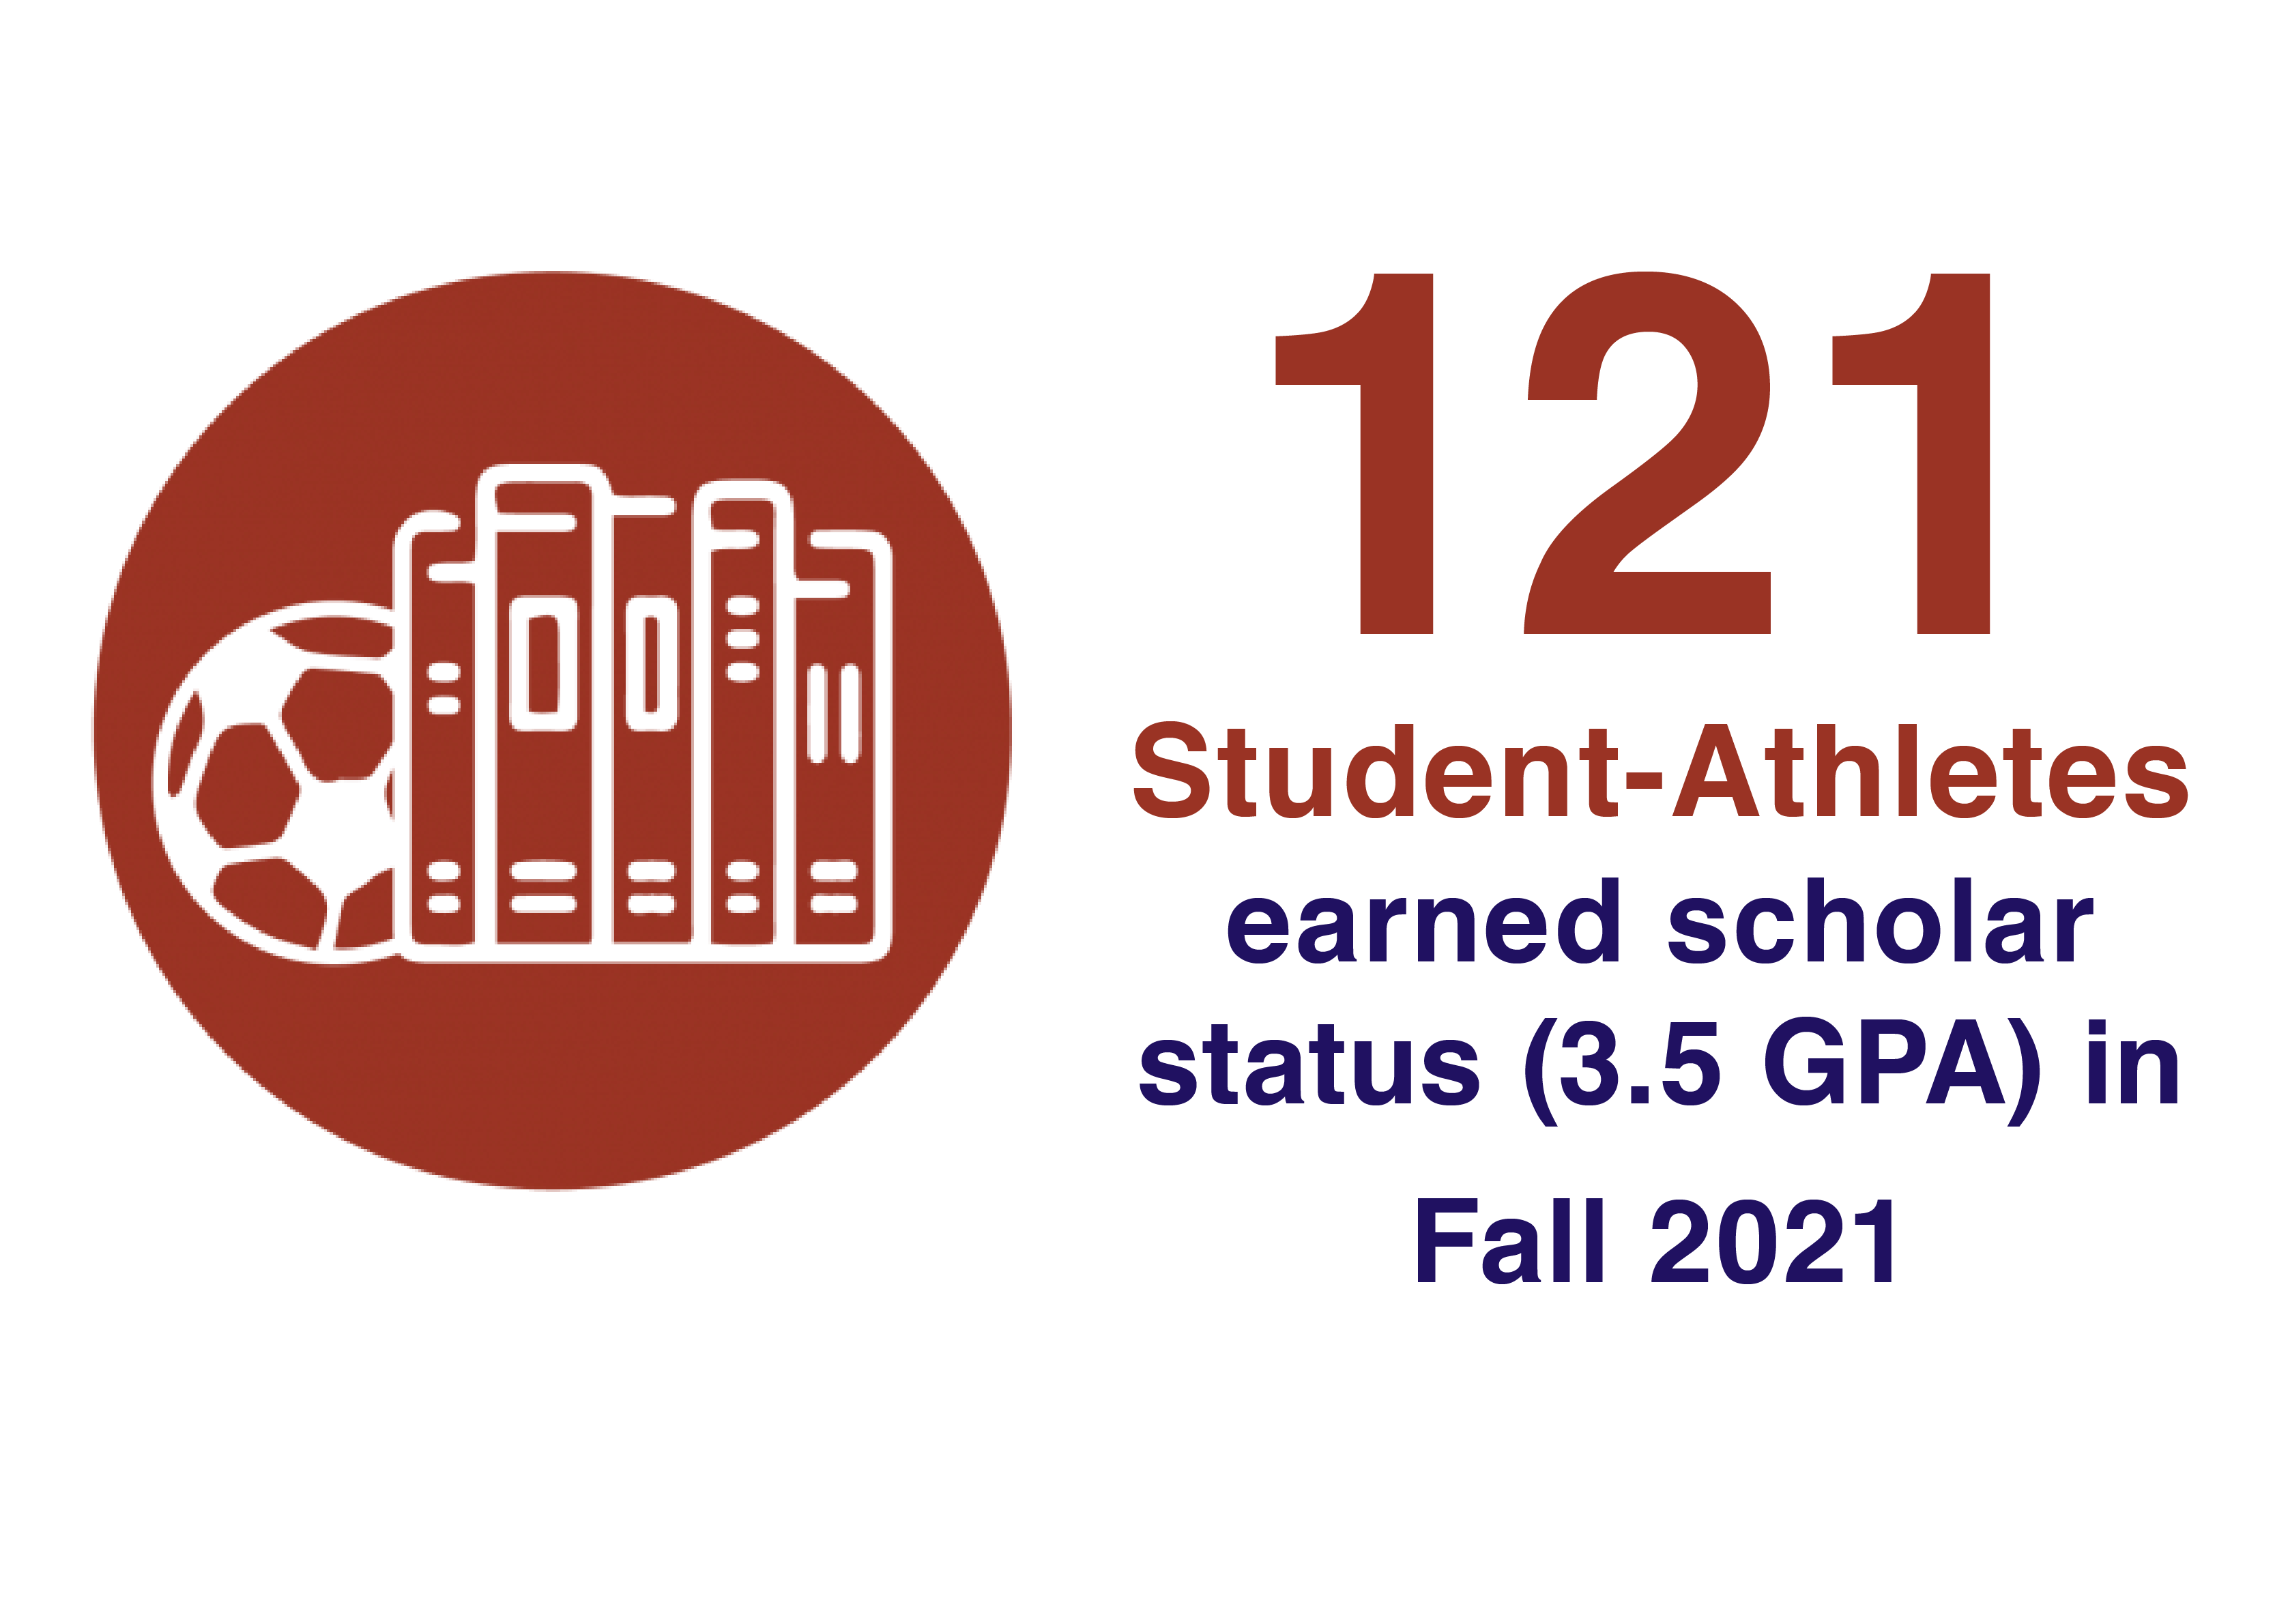 121 student-athletes earned scholar status fall '21